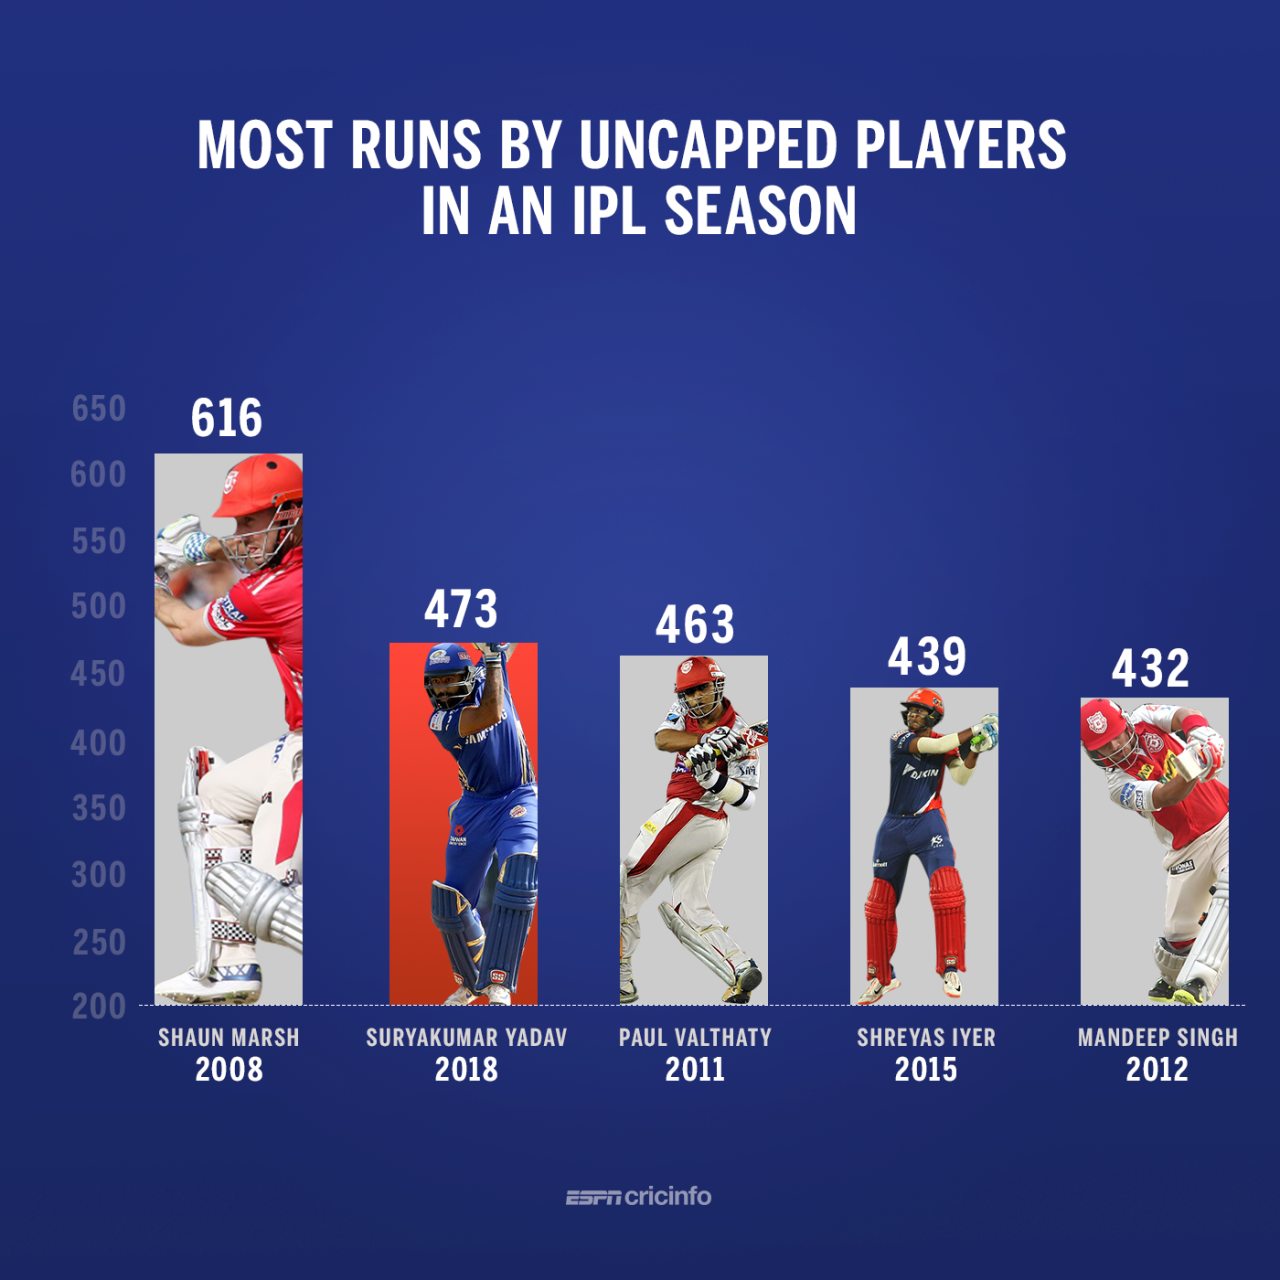 Suryakumar Yadav has scored four fifties from 12 innings in IPL 2018